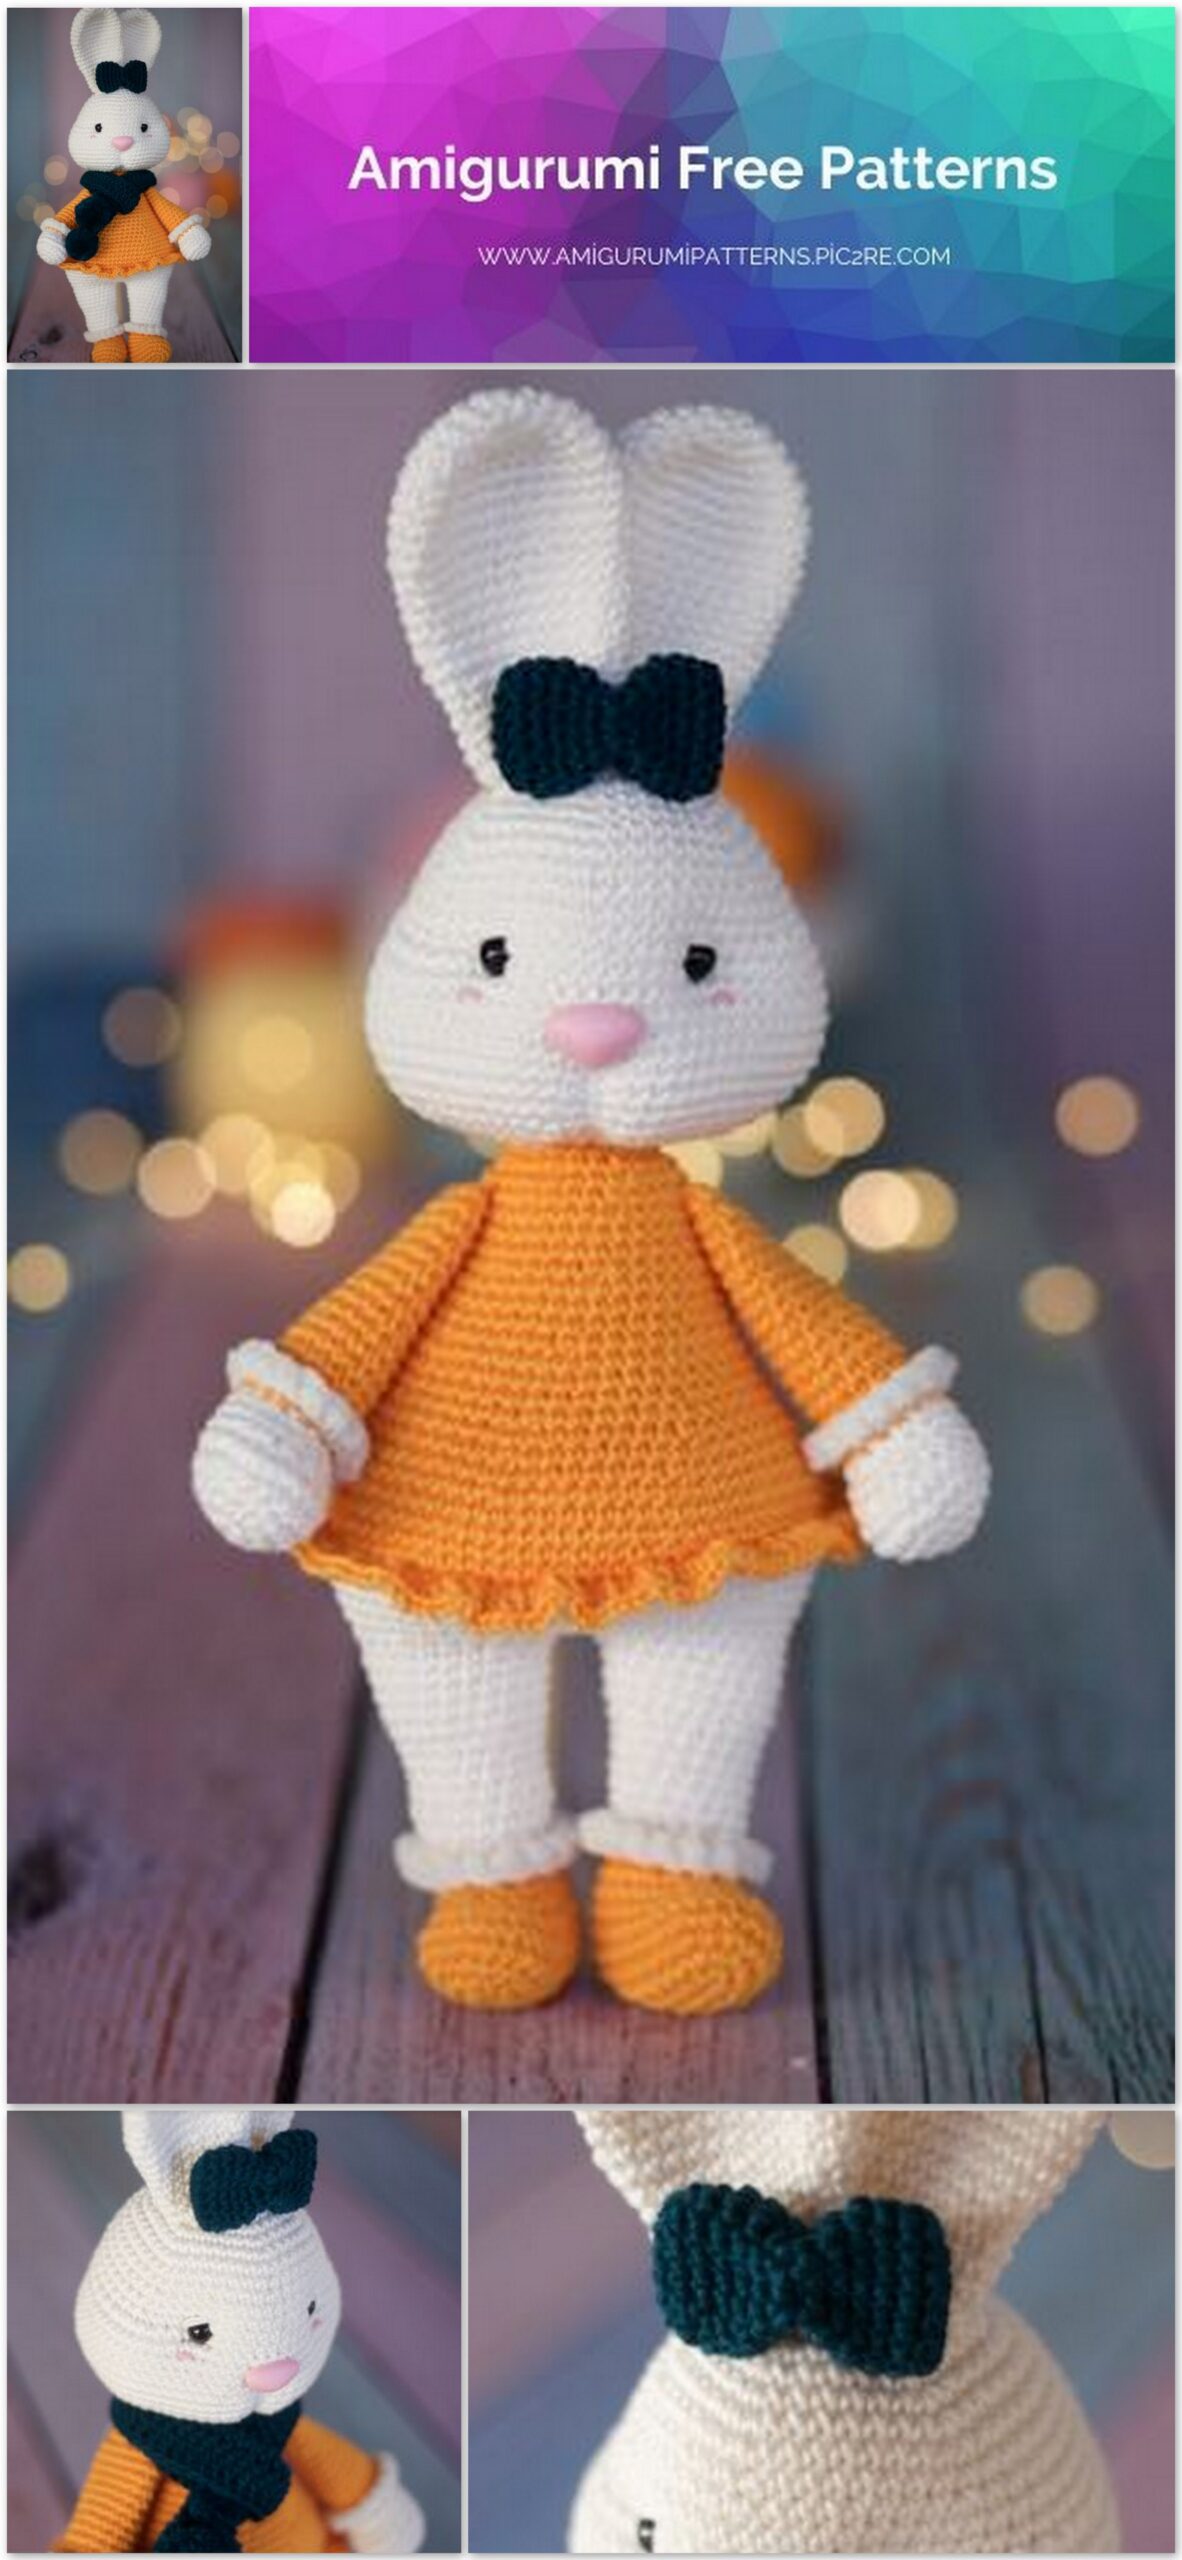 Amigurumi Bunny Free Crochet Pattern – Amigurumi Patterns Pic2re